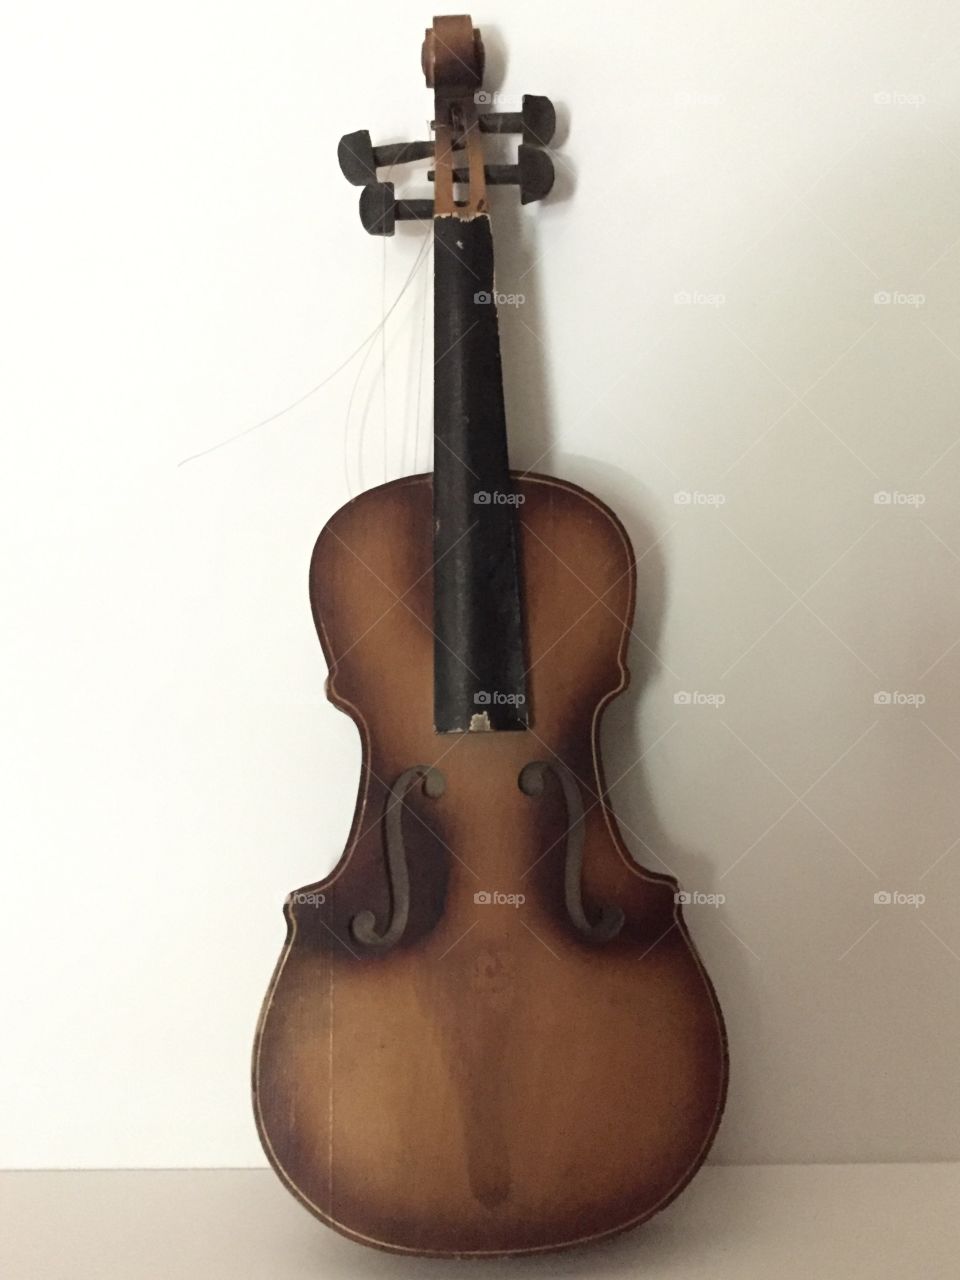 Broken Violin
